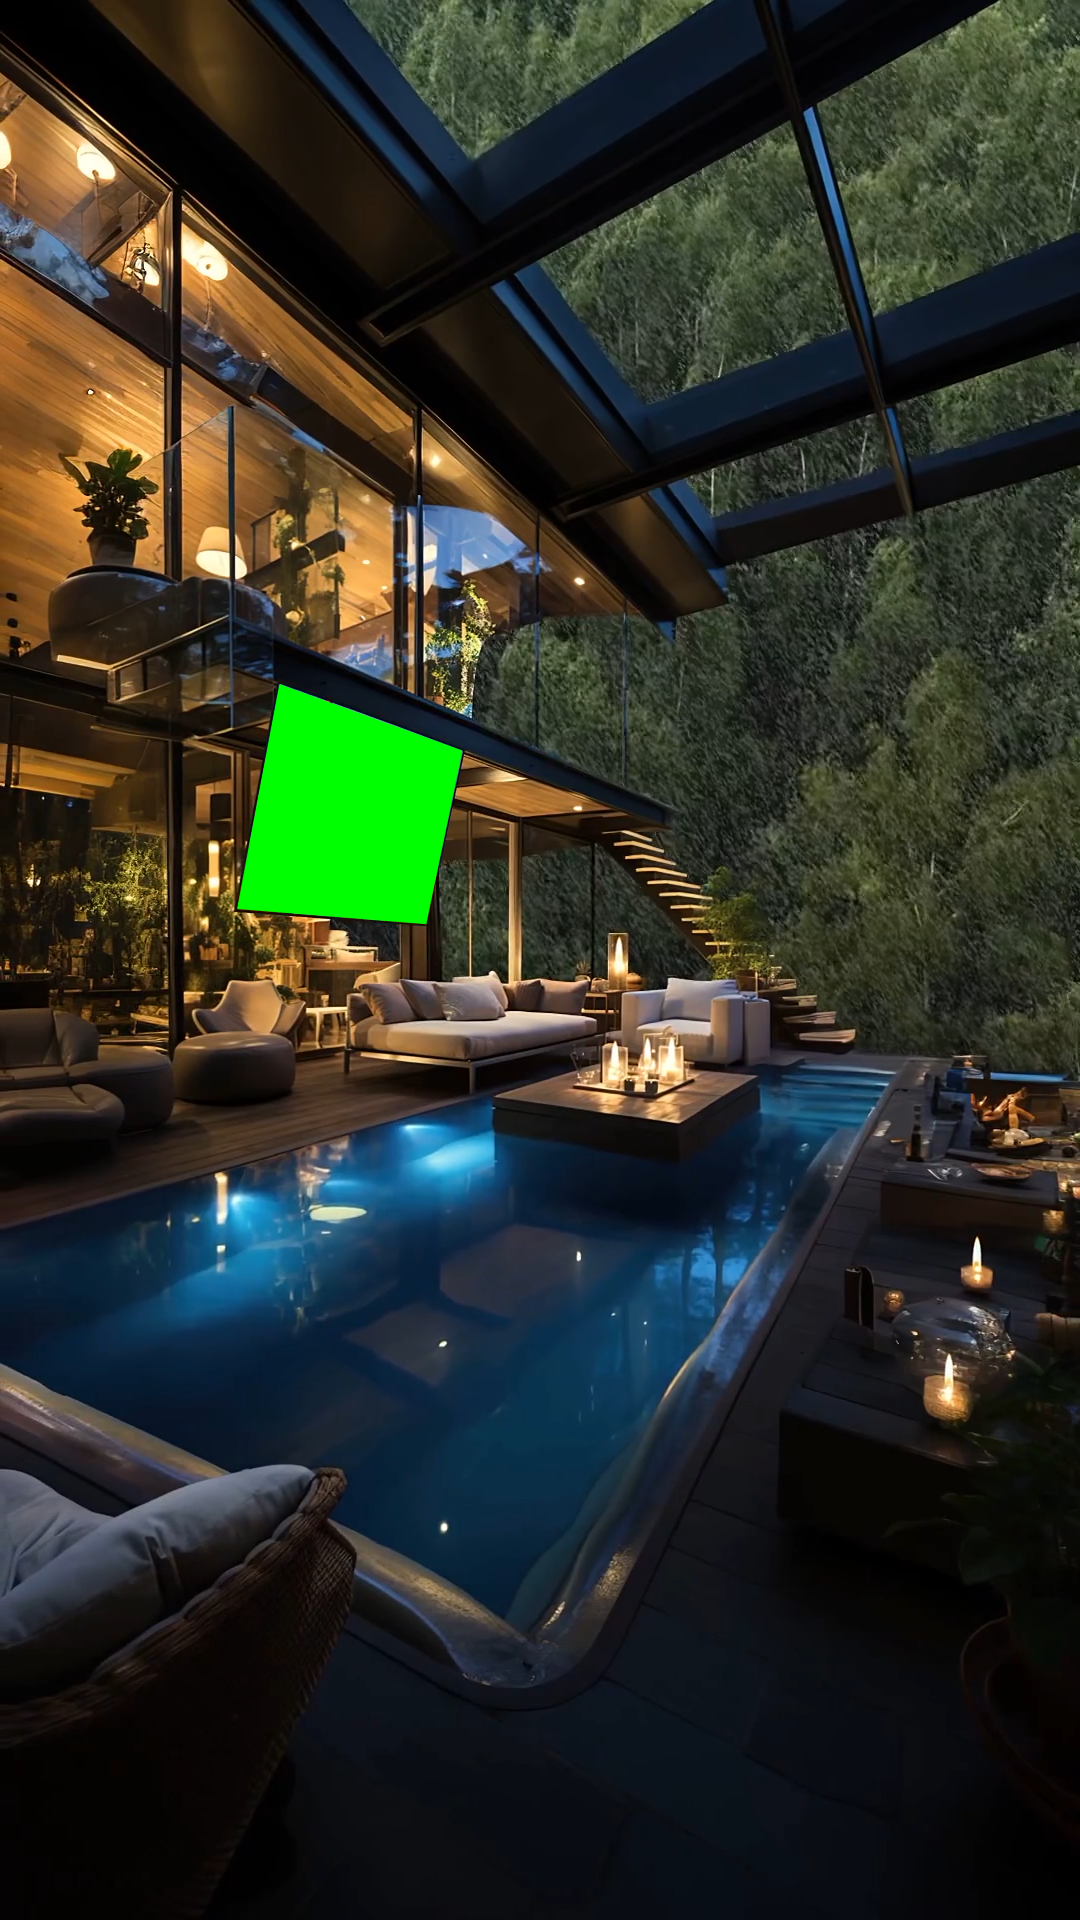 TV Screen inside Swimming Pool Living Room (Green Screen)